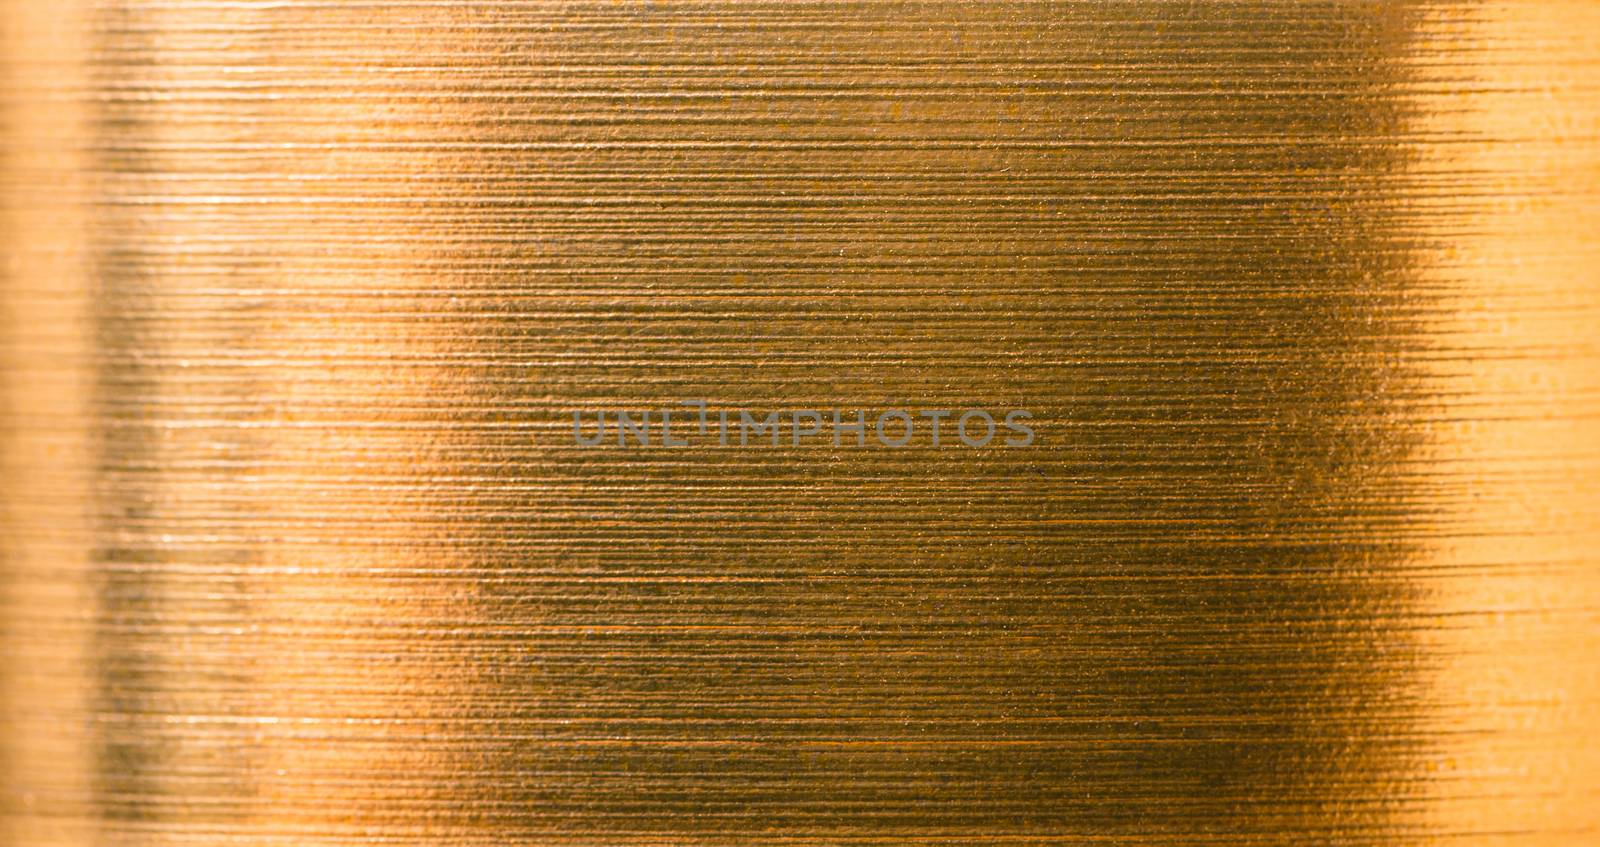 gold foil close-up texture by MegaArt